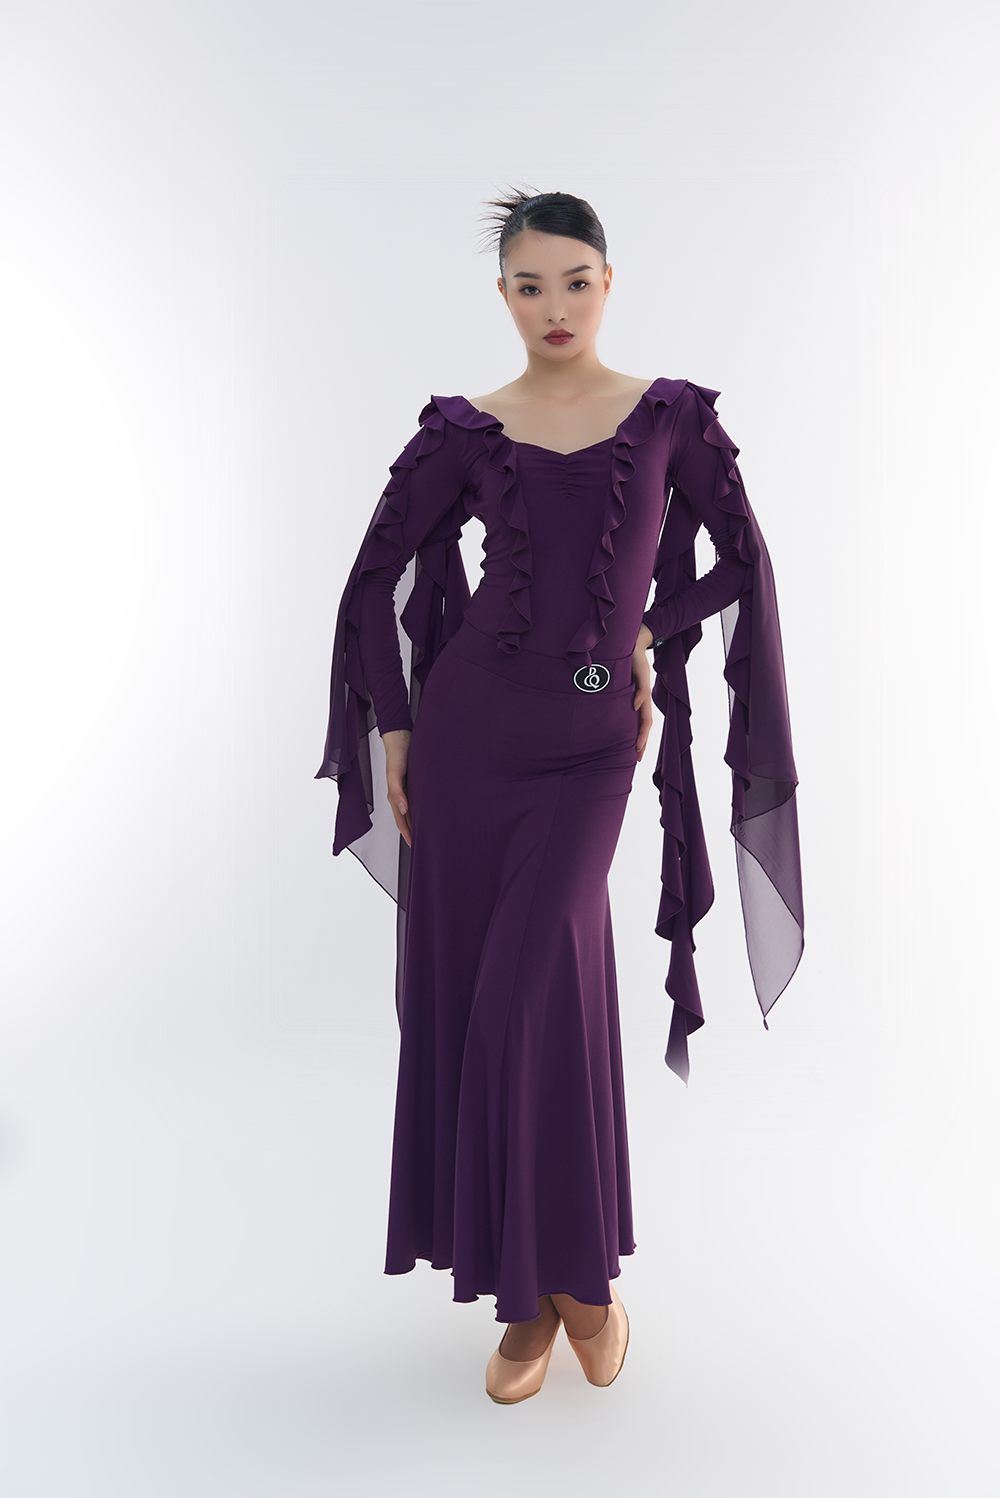 DANCE QUEEN 391-2 Basic modern dark purple skirt